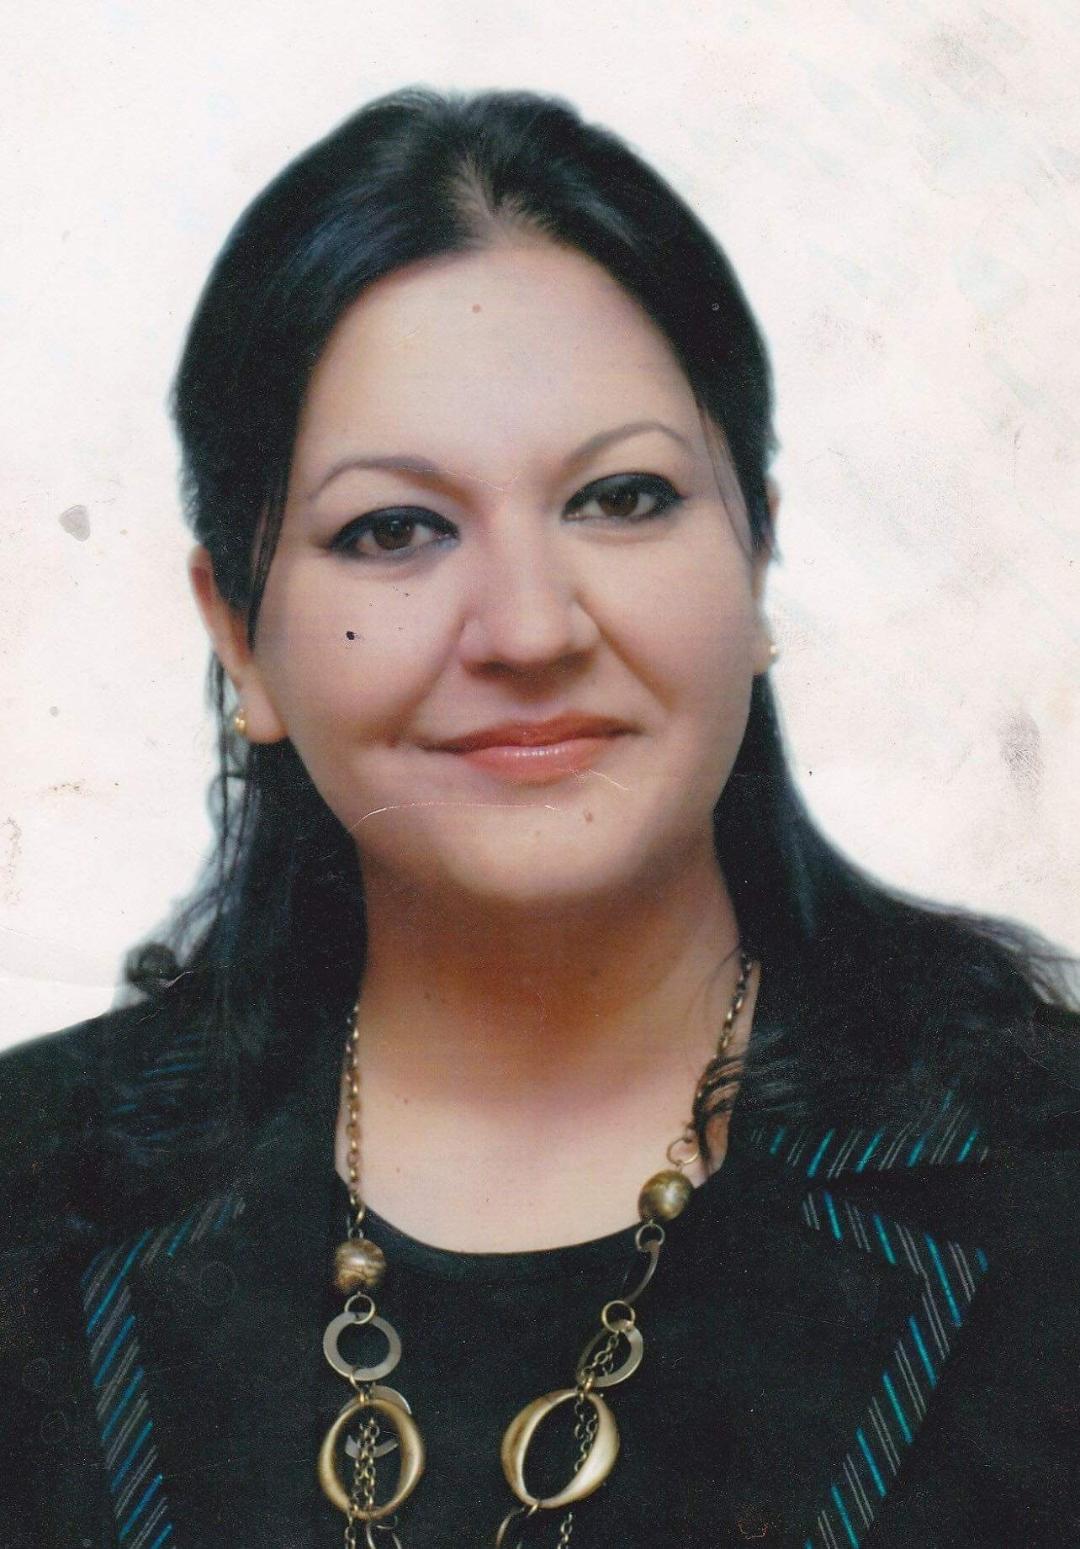 Dr. Mayyadah Fahmi Hussein – Jordan